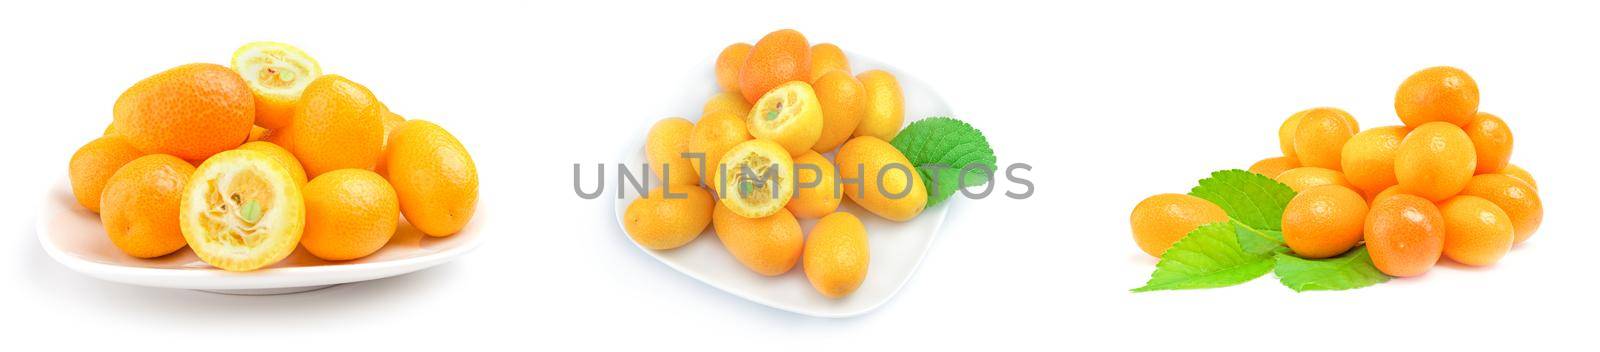 Collection of kumquats